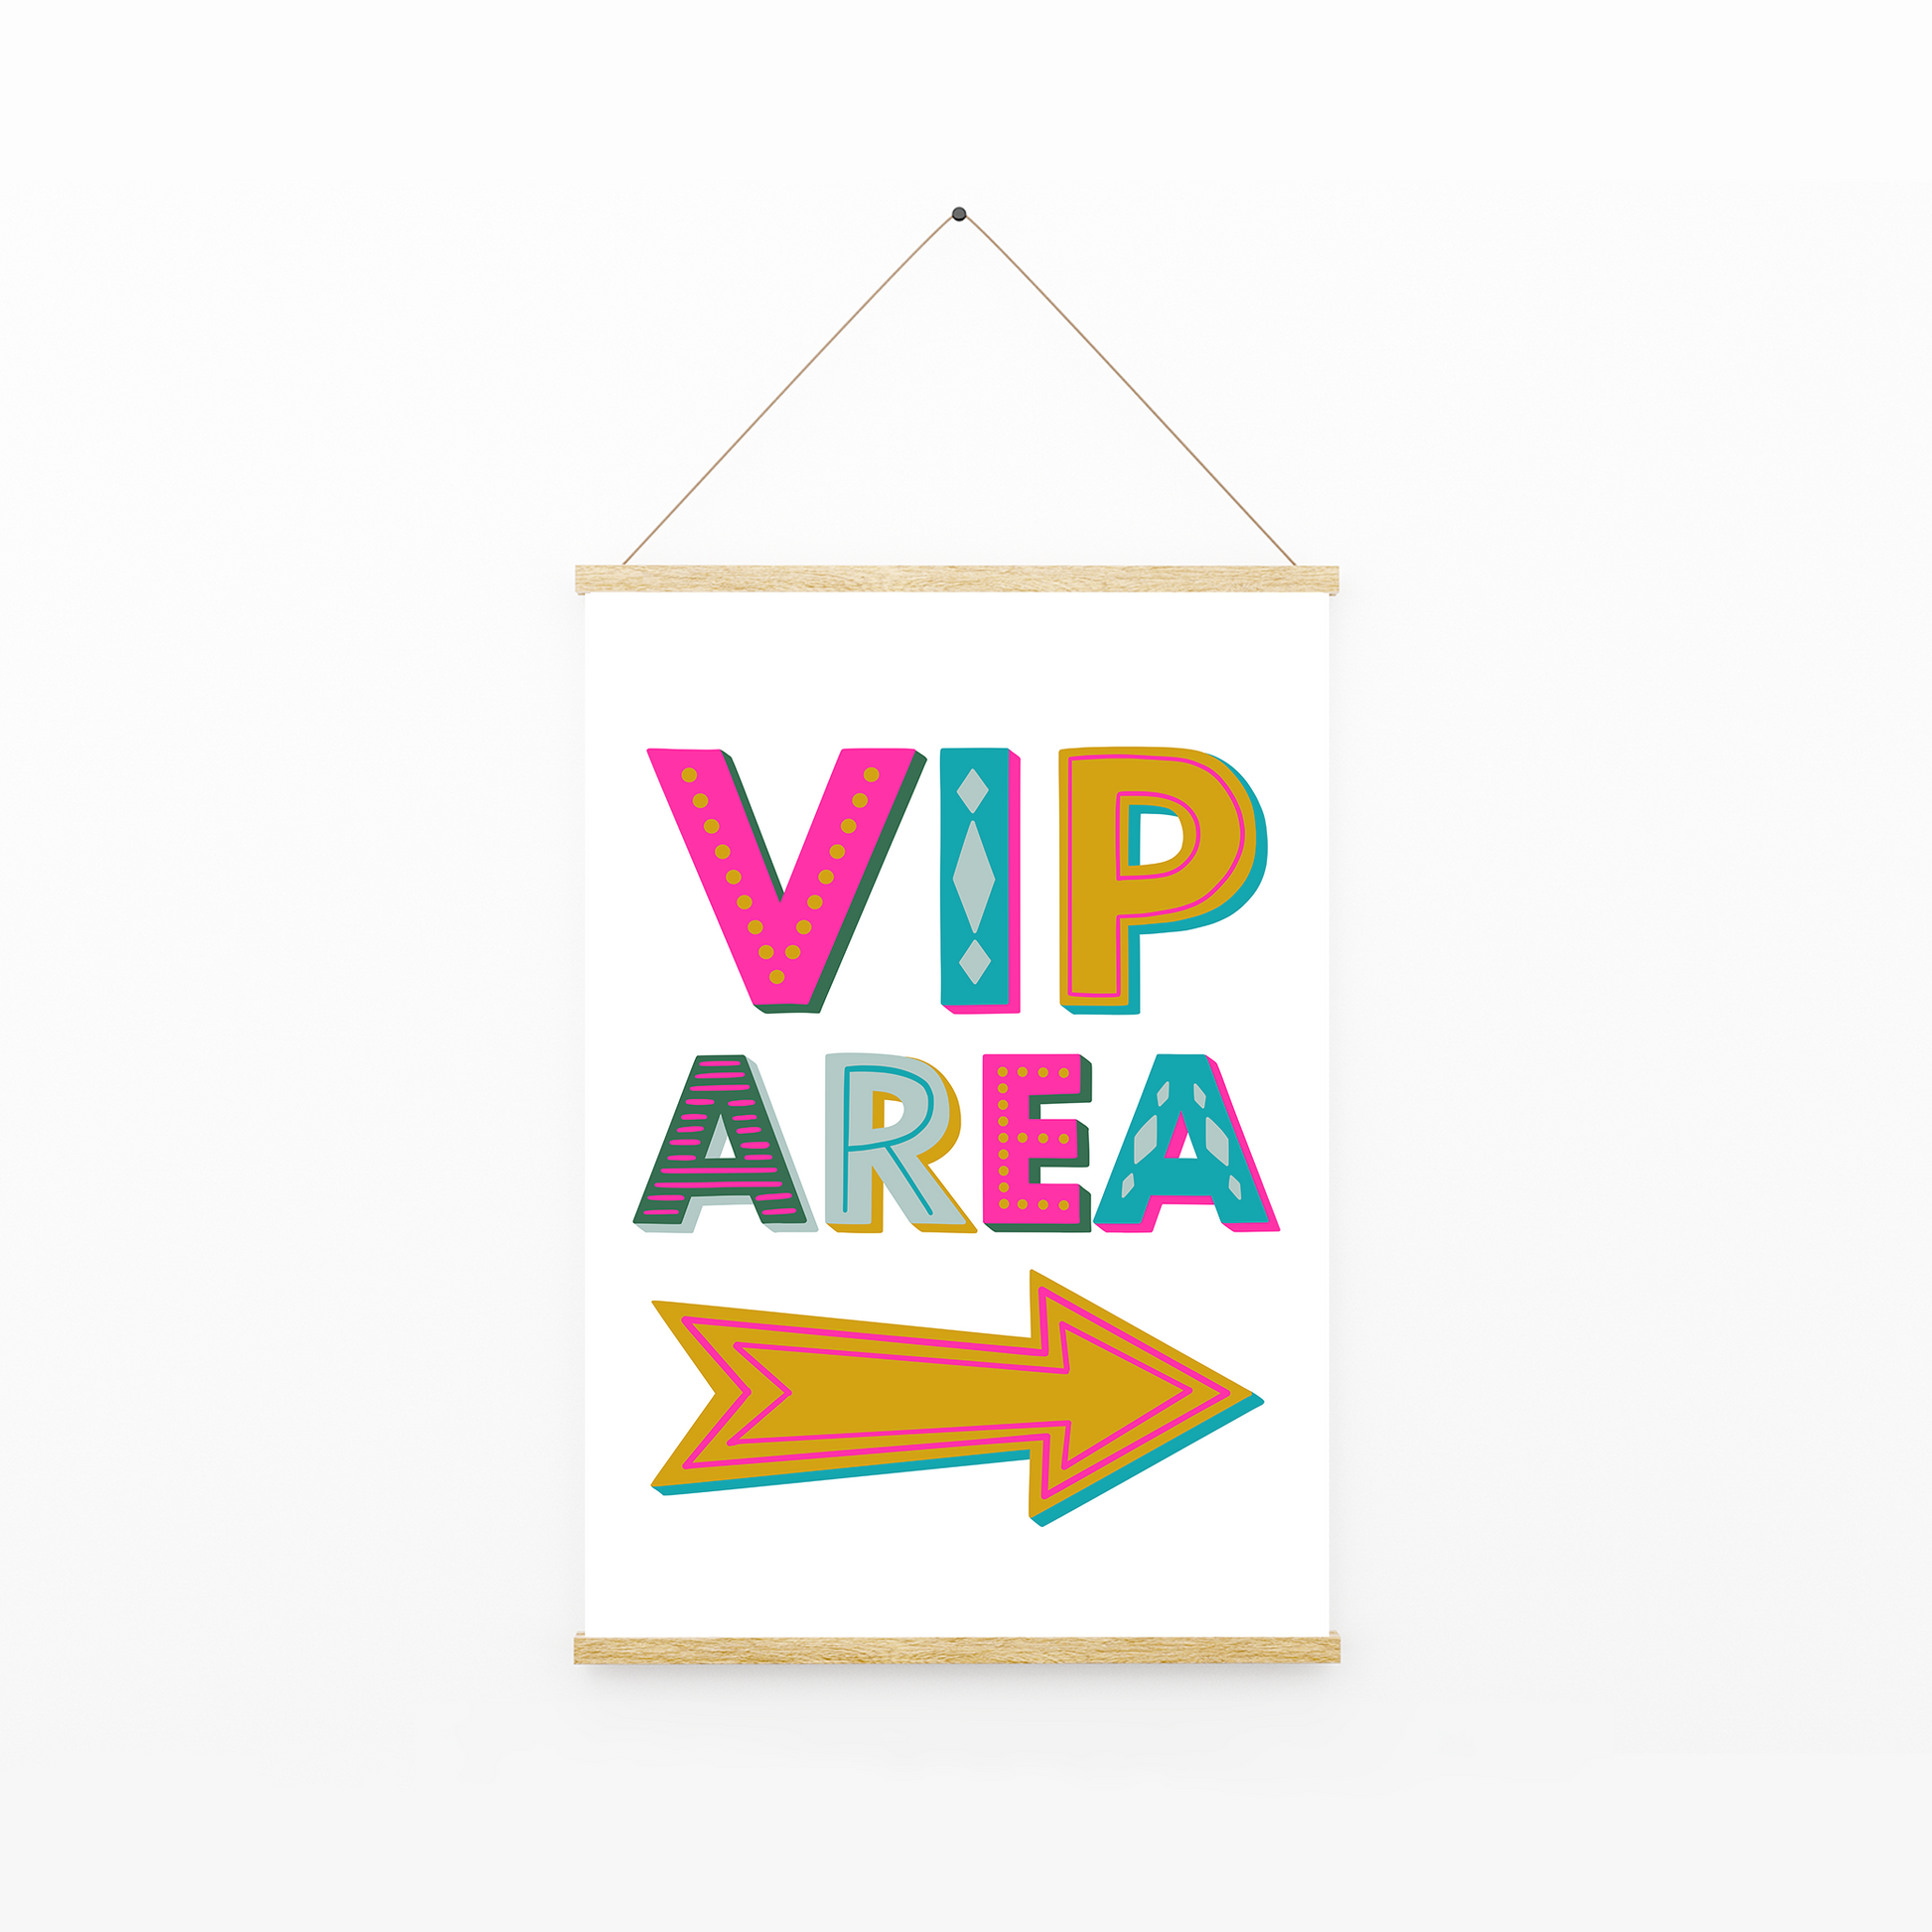 VIP Area print, VIP print, home bar decor, funny wall art, prints for home, quirky decor